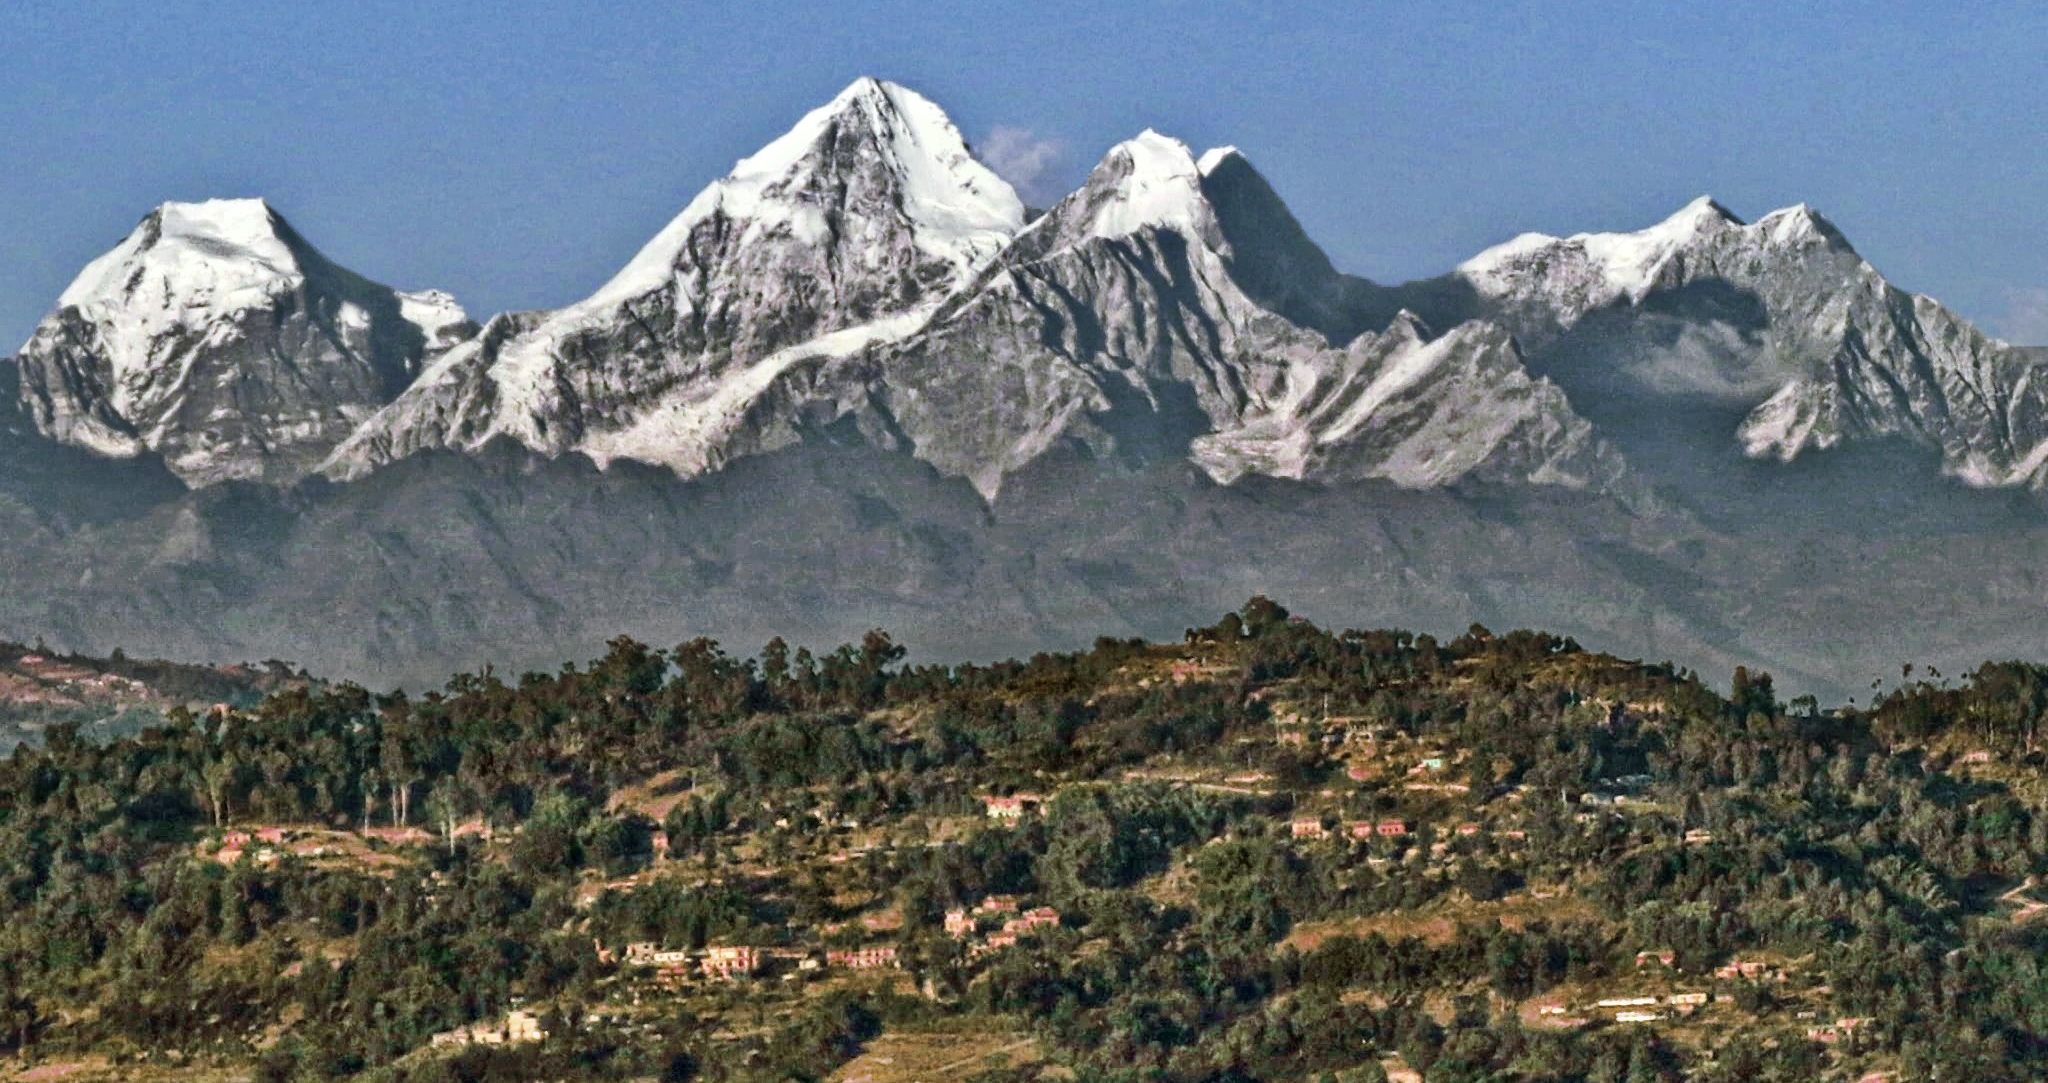 Mt. Dorje Lakpa ( 6988m ) in the Jugal Himal